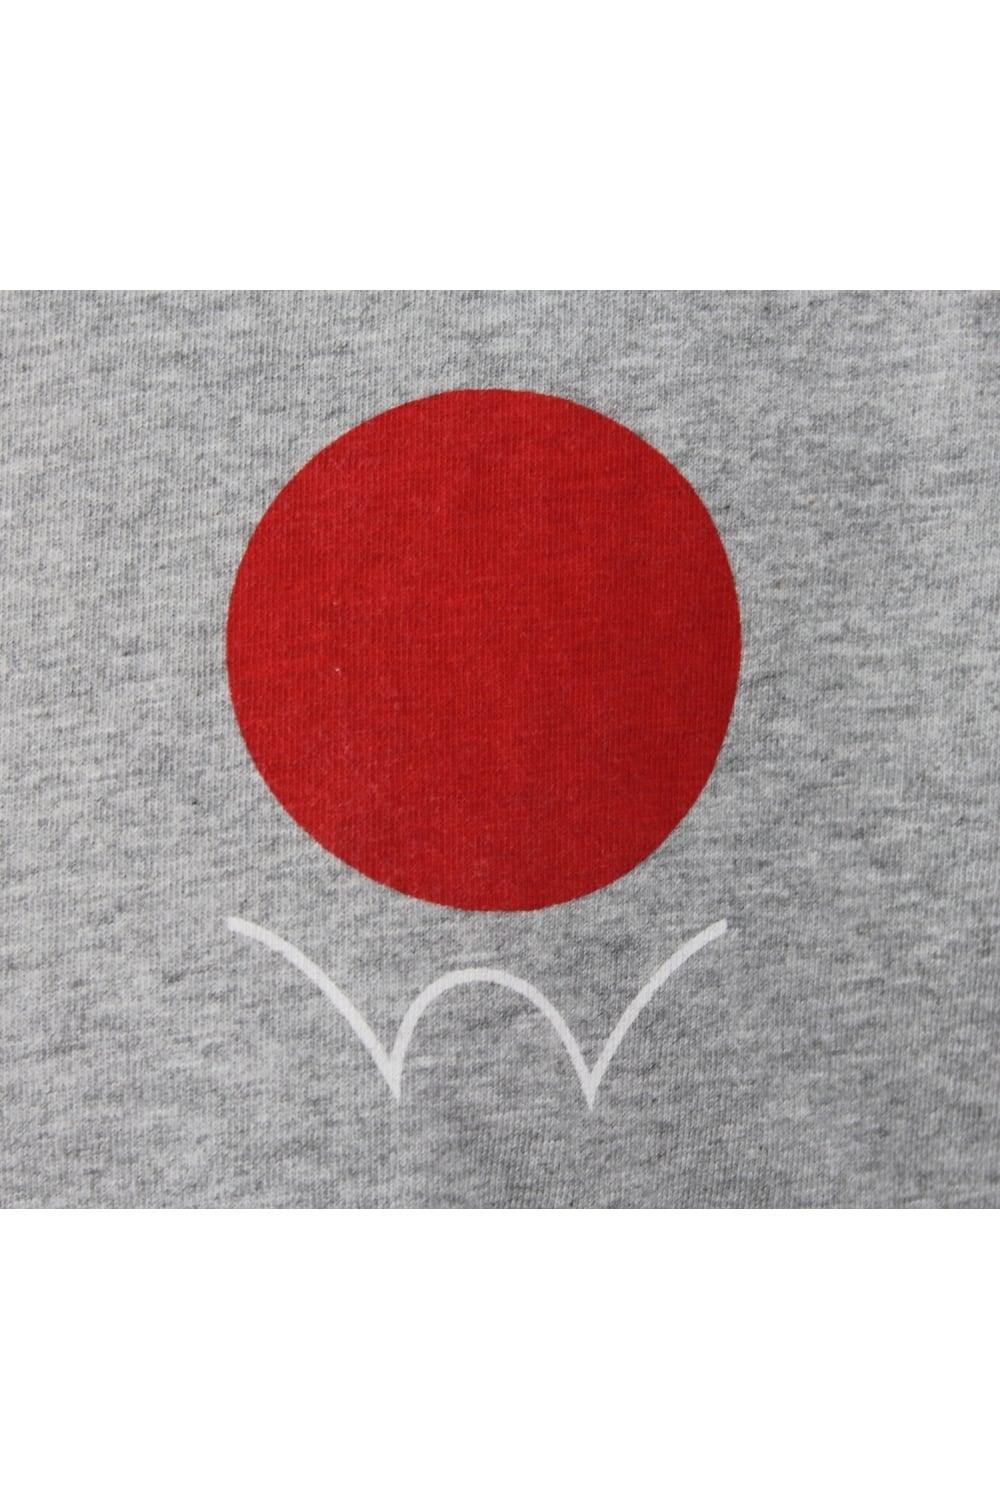 Grey and Red Circle Logo - Edwin Red Dot Short-Sleeved T-Shirt (Grey) | ThirtySix